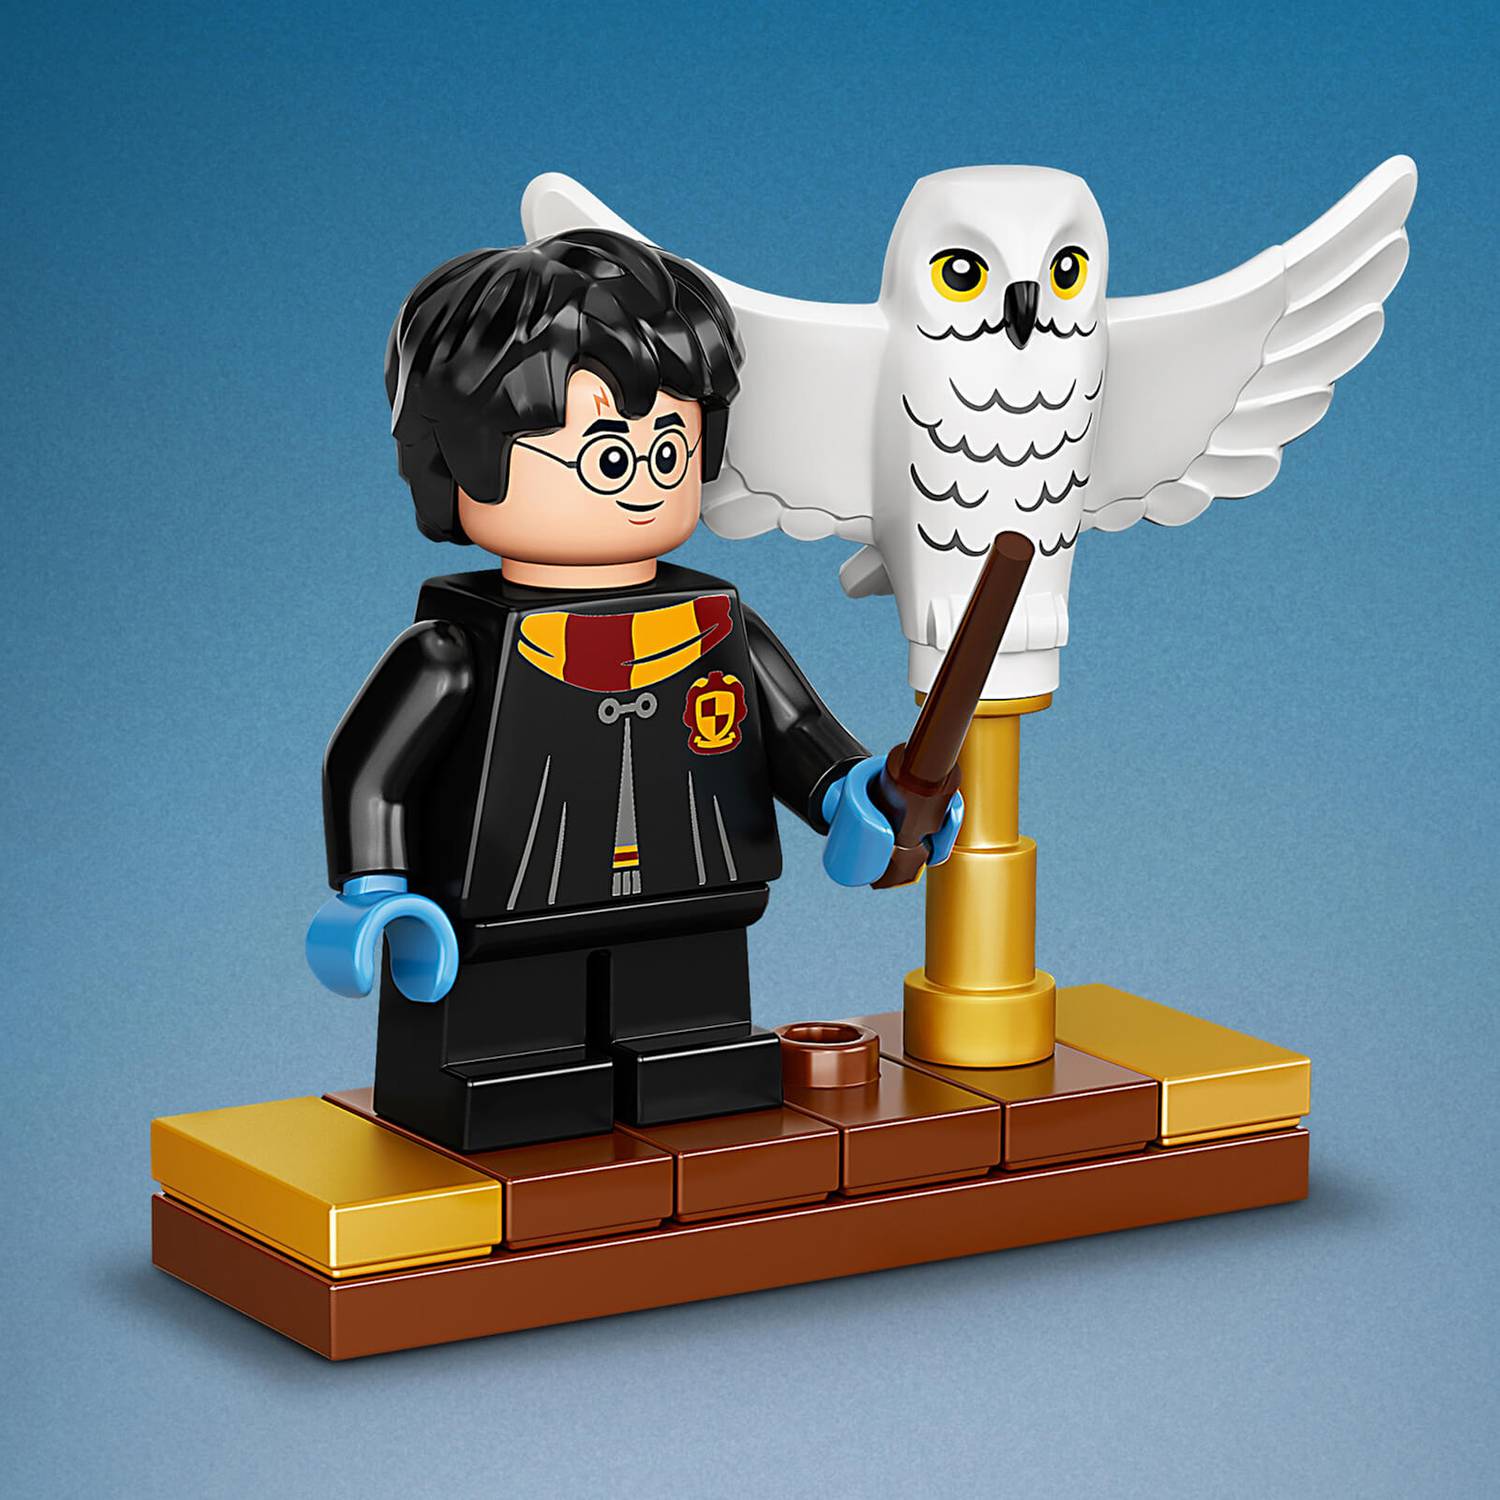 FUNKO Figura de Lechuza Hedwig de Harry Potter